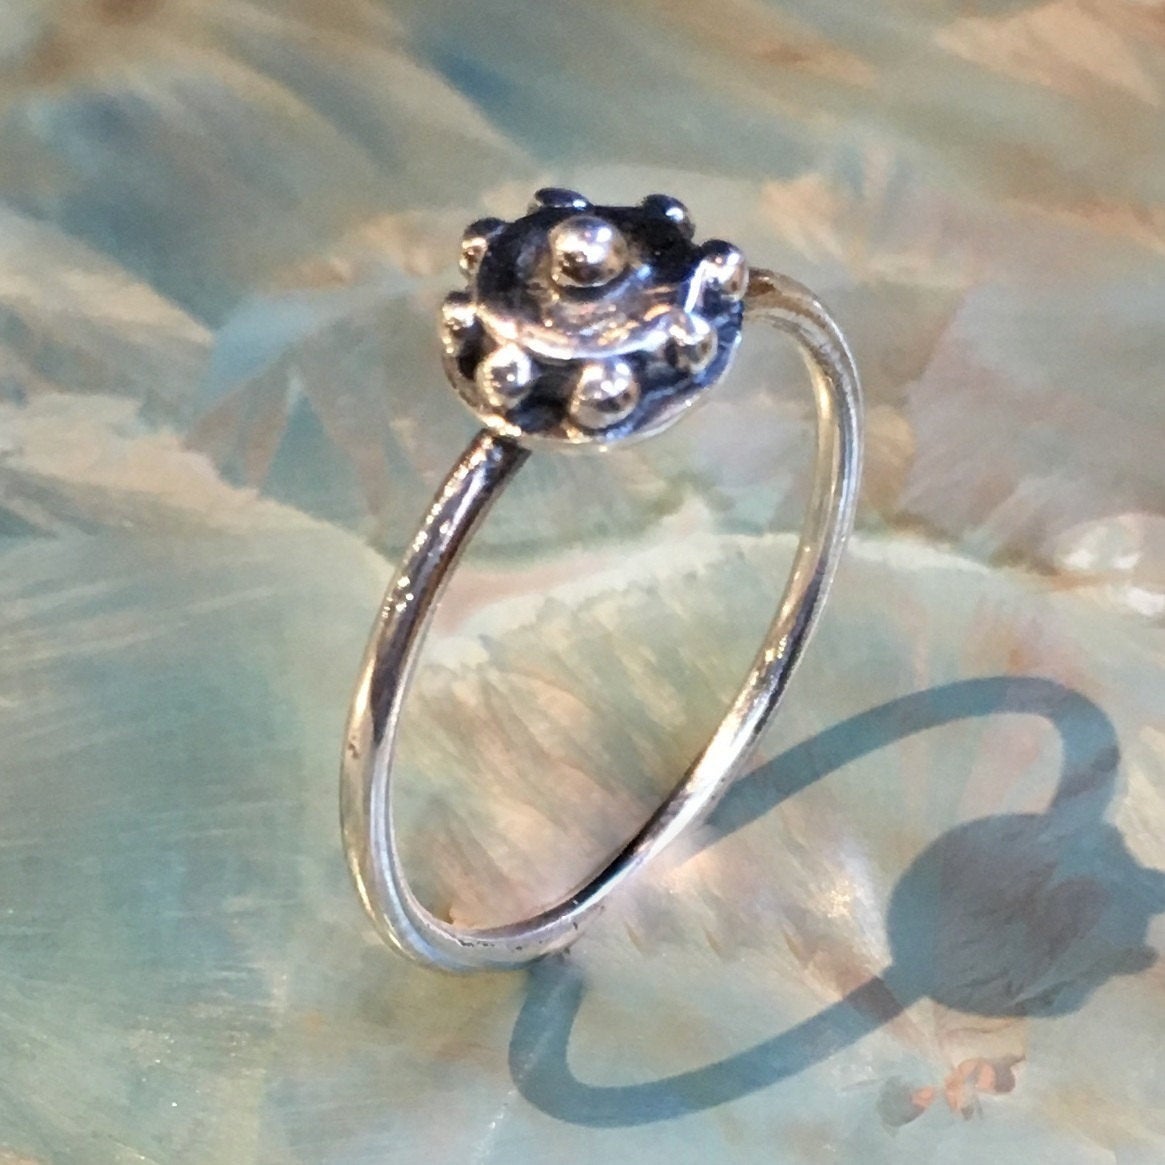 Minimalist Silver Ring, Stacking Ring, Skinny Ring, organic ring, Stackable Silver Ring, button ring, dainty ring, thin ring - Lisa R2486